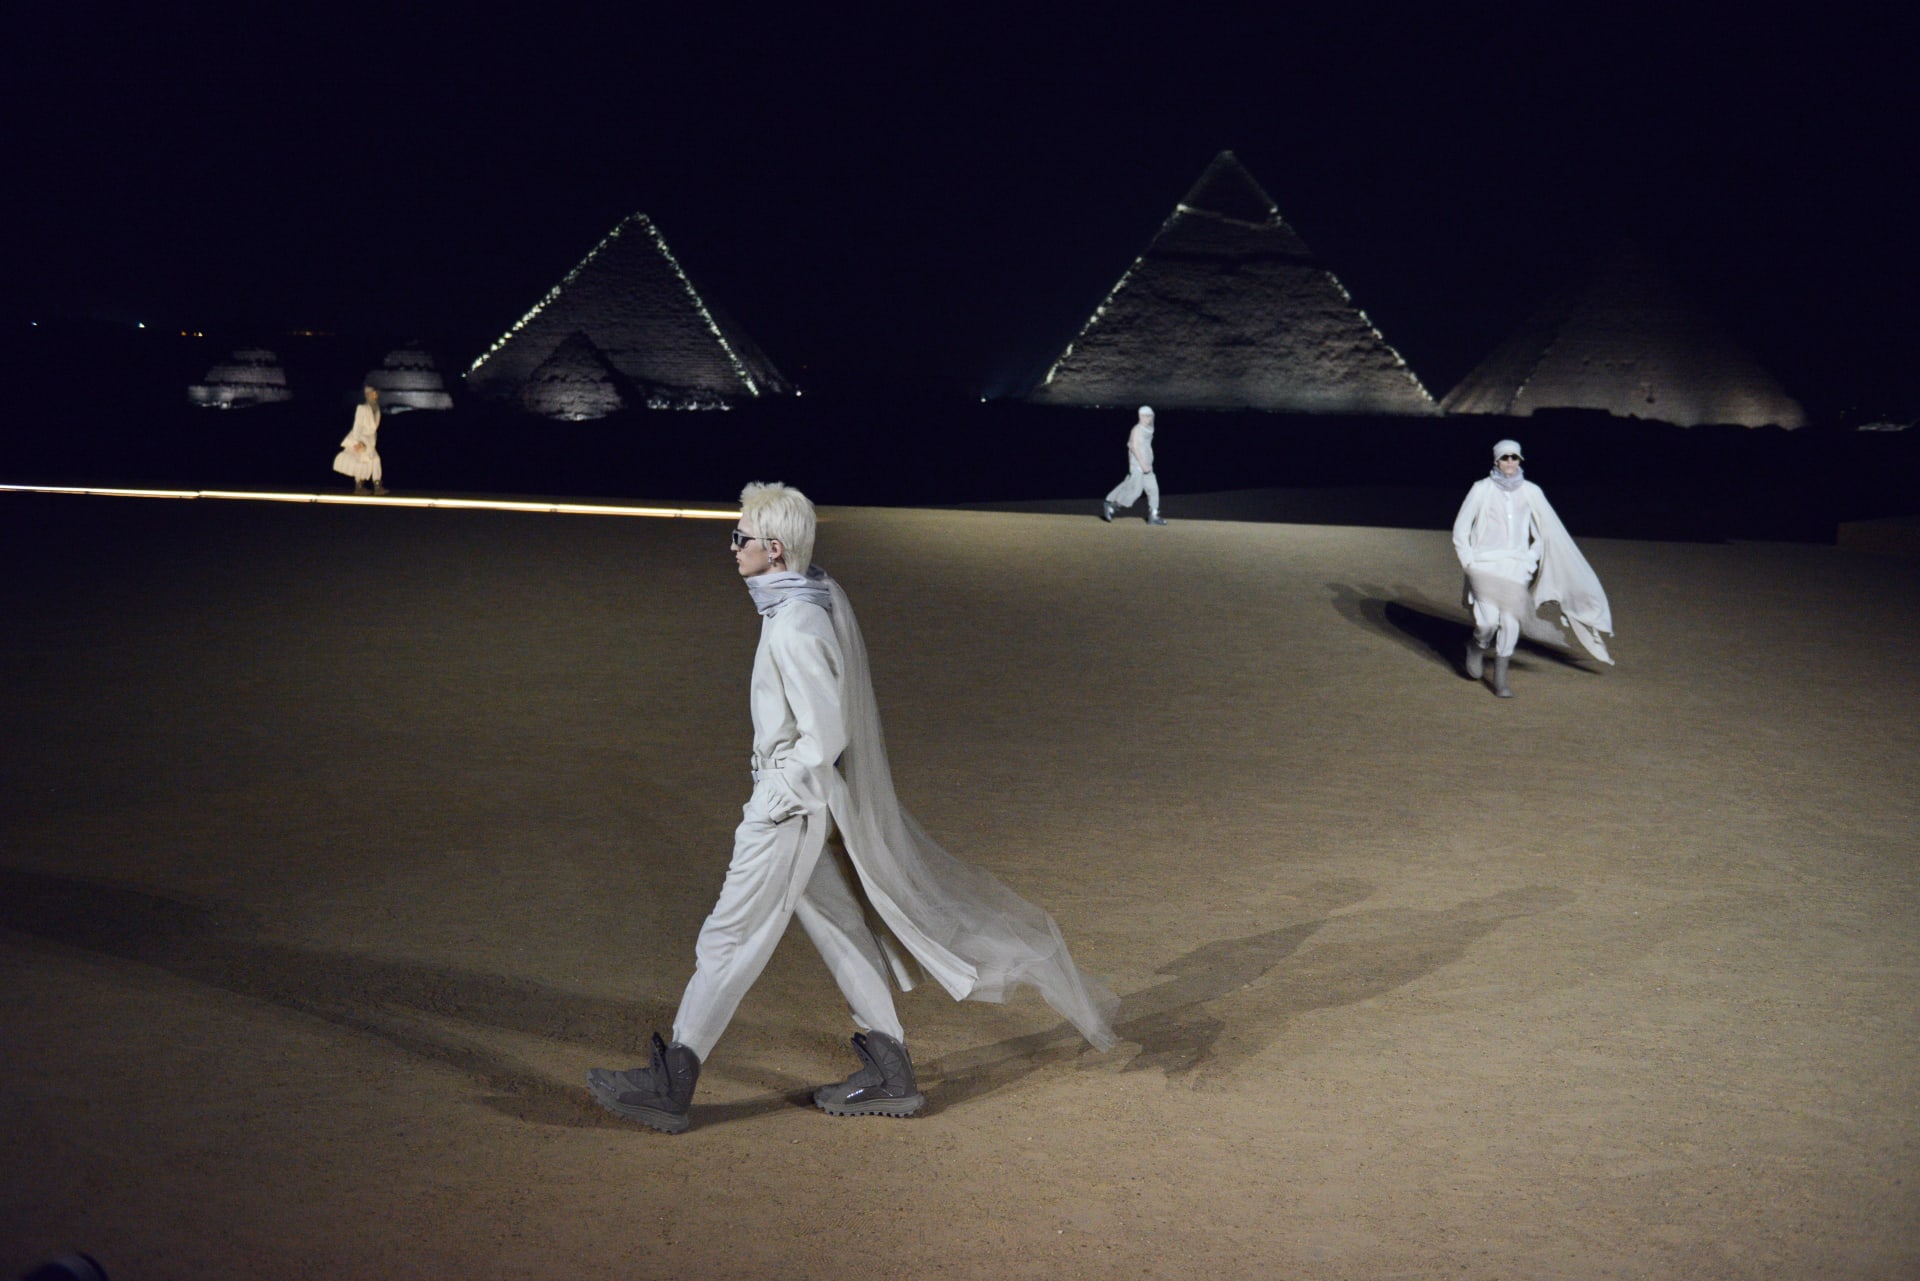 Dior Fashion Show at the Pyramids of Giza